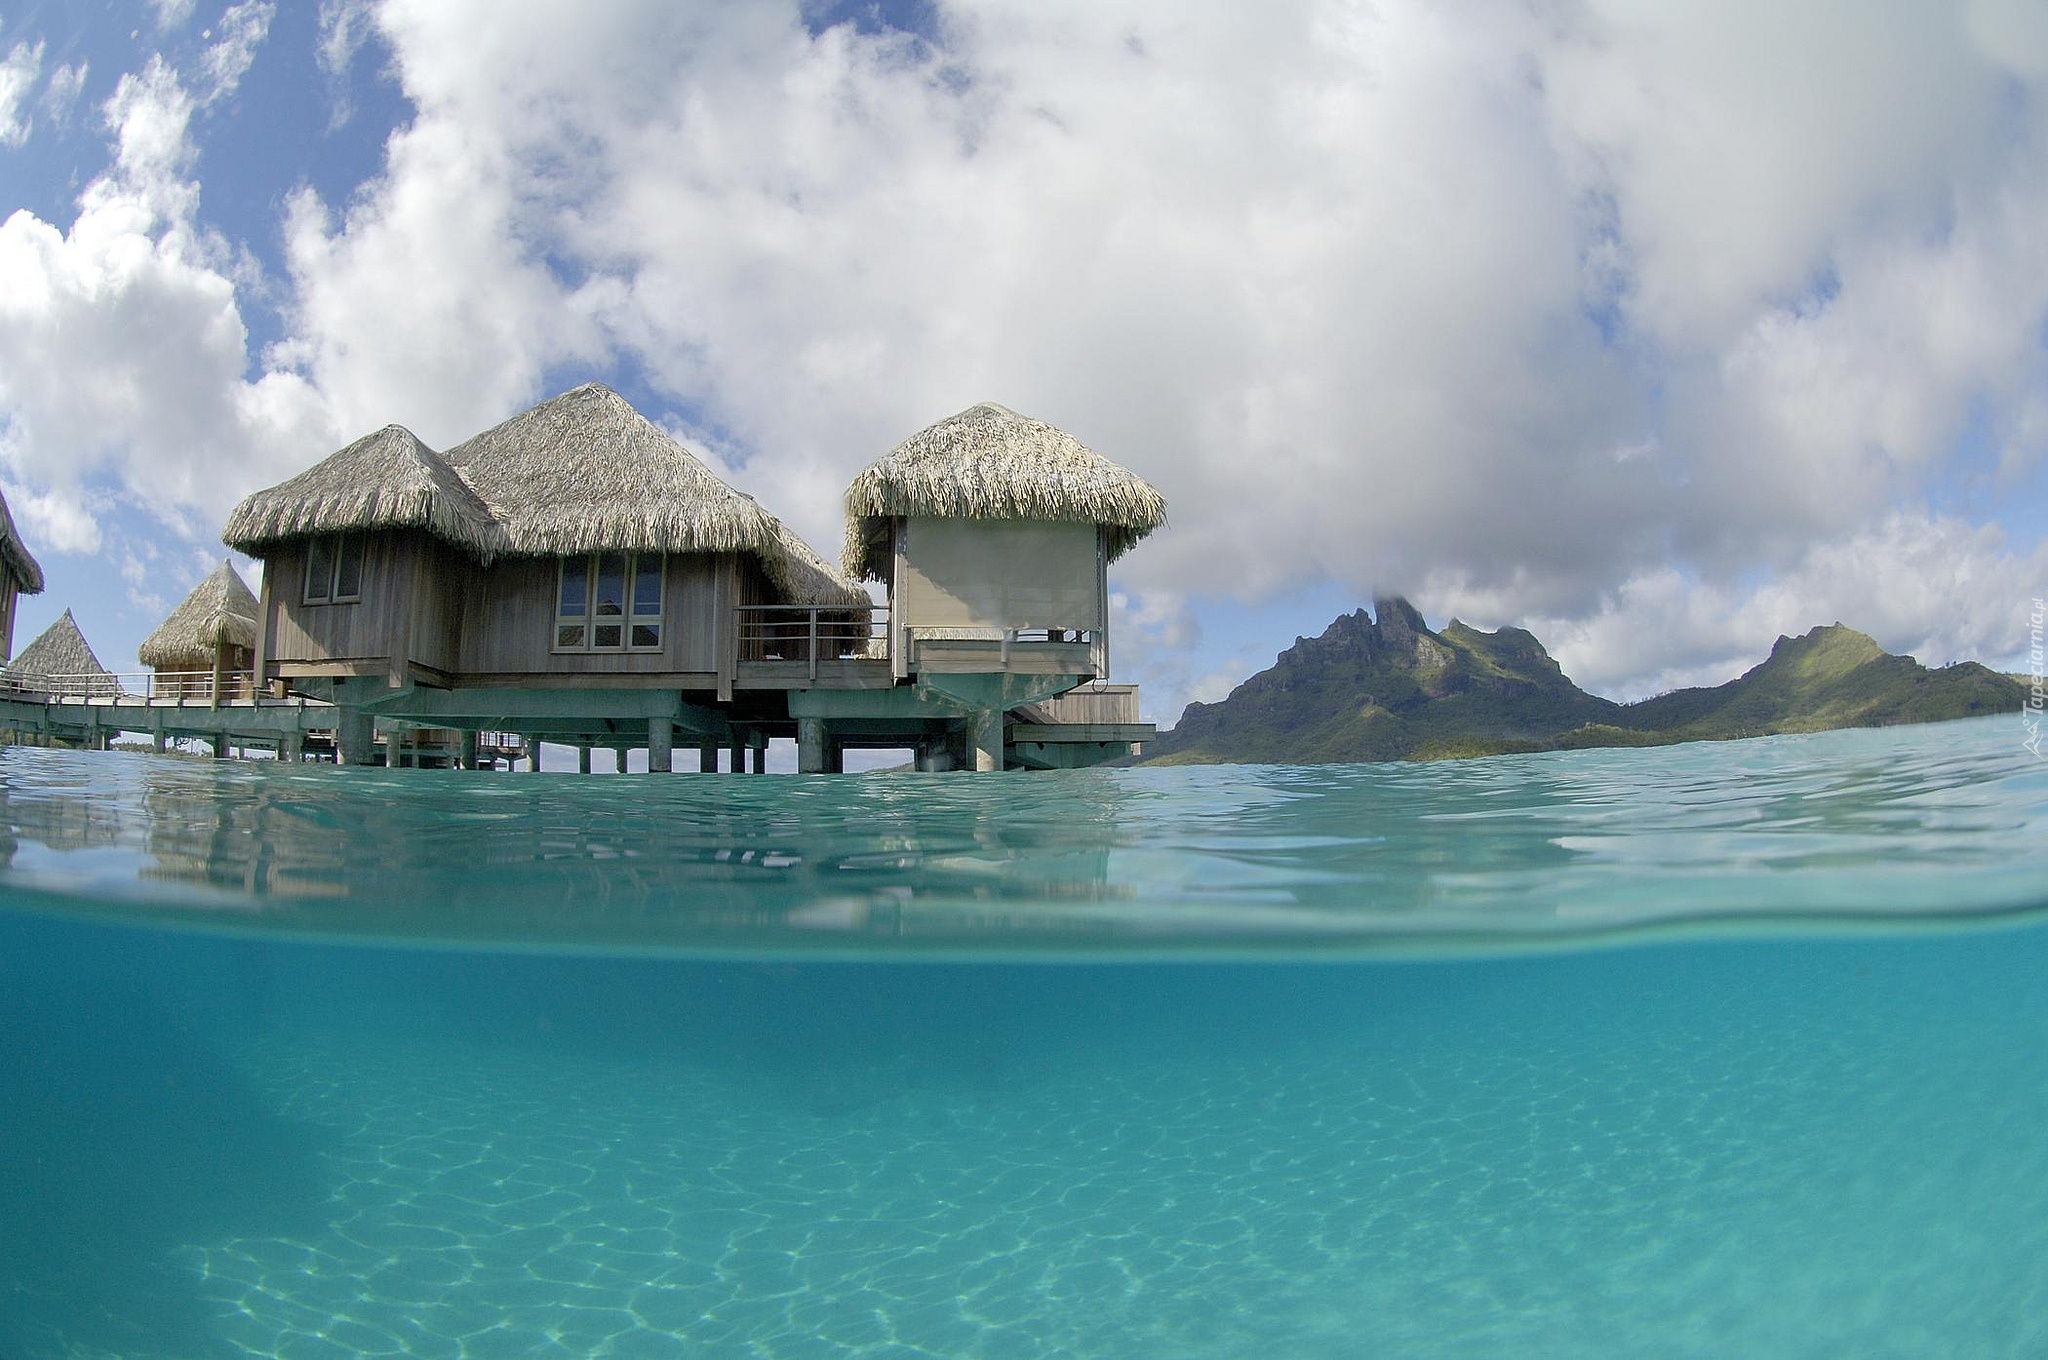 Domki, Na, Wodzie, Bora Bora